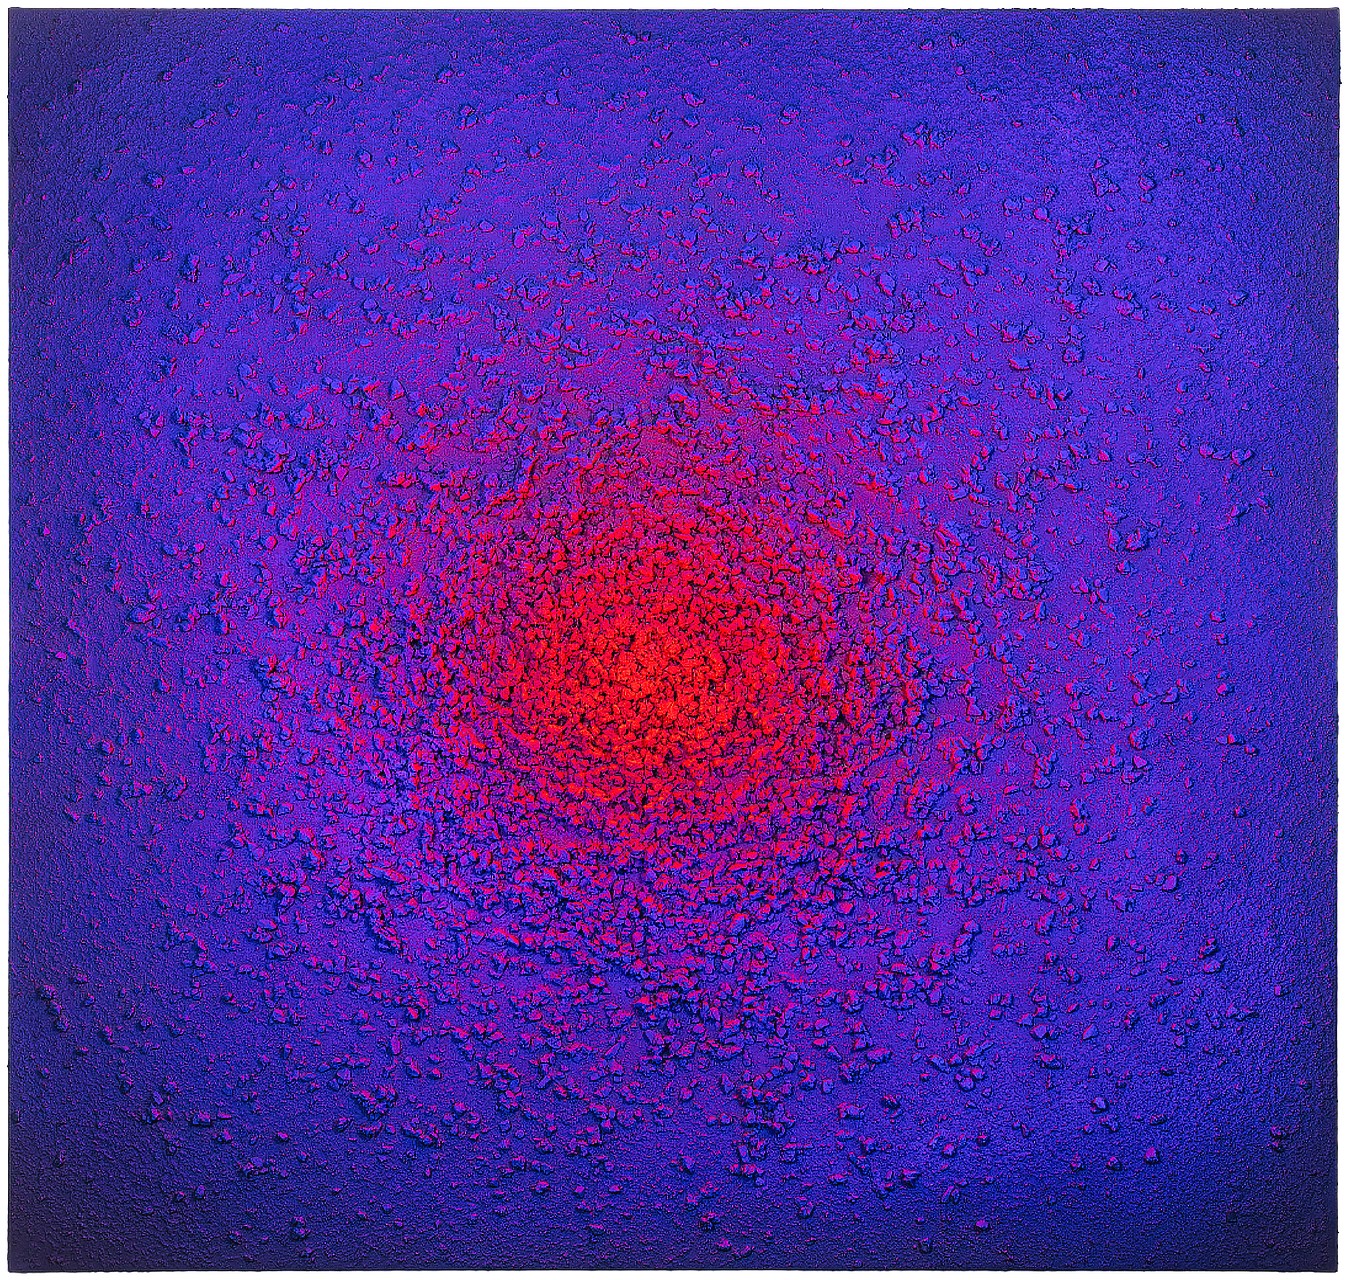 Interstellar Galaxy Blue Red 18.54 - SAMUEL DEJONG - Galeries Bartoux